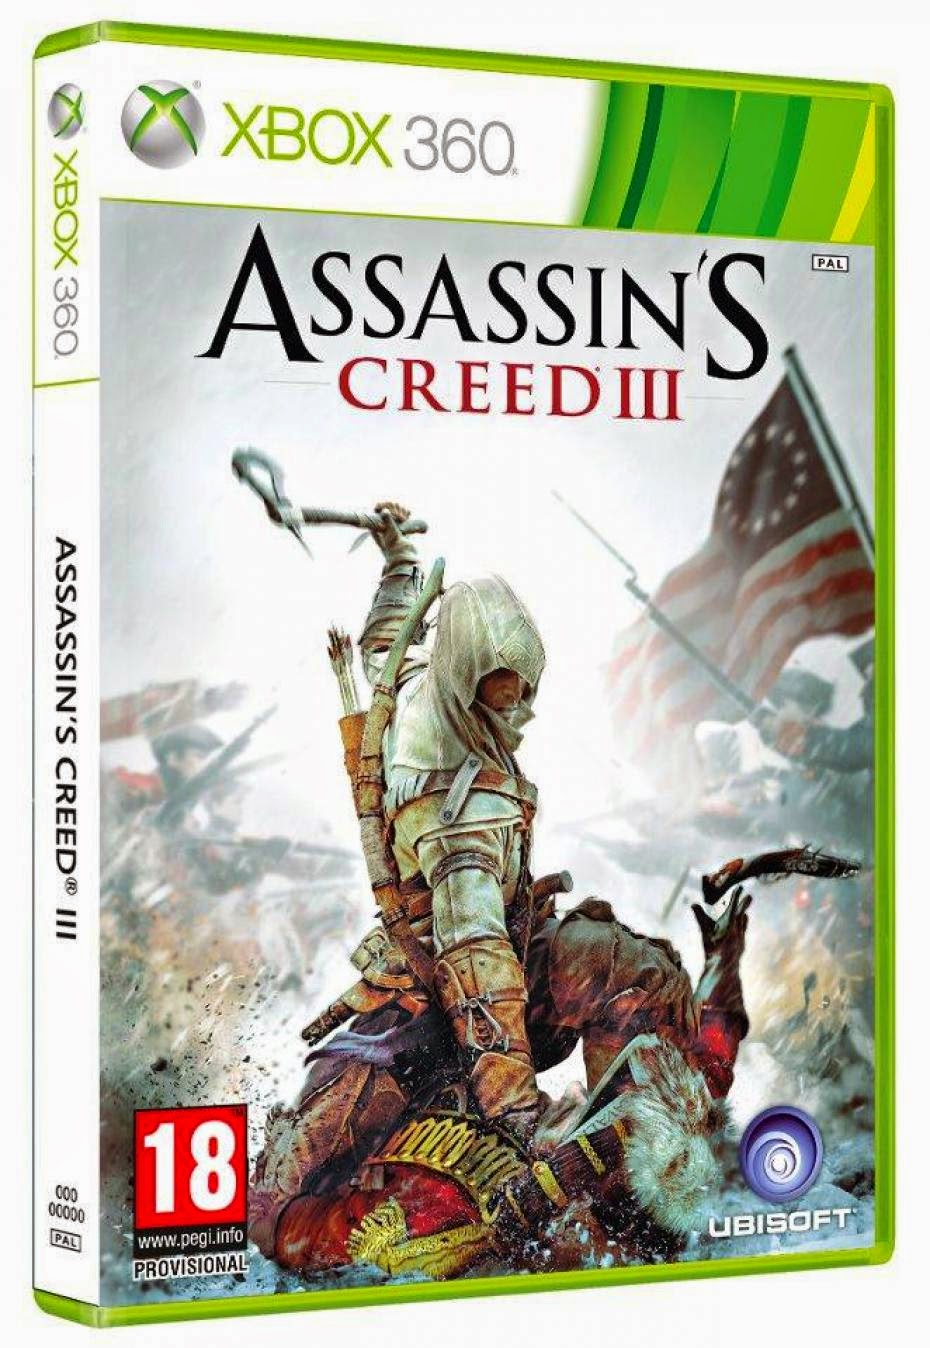 Игры на хвох. Assassin's Creed Xbox 360 диск. Ассасин Крид на Xbox 360. Assassins Creed 3 диск для Xbox 360. Диски для Xbox 360 ассасин.